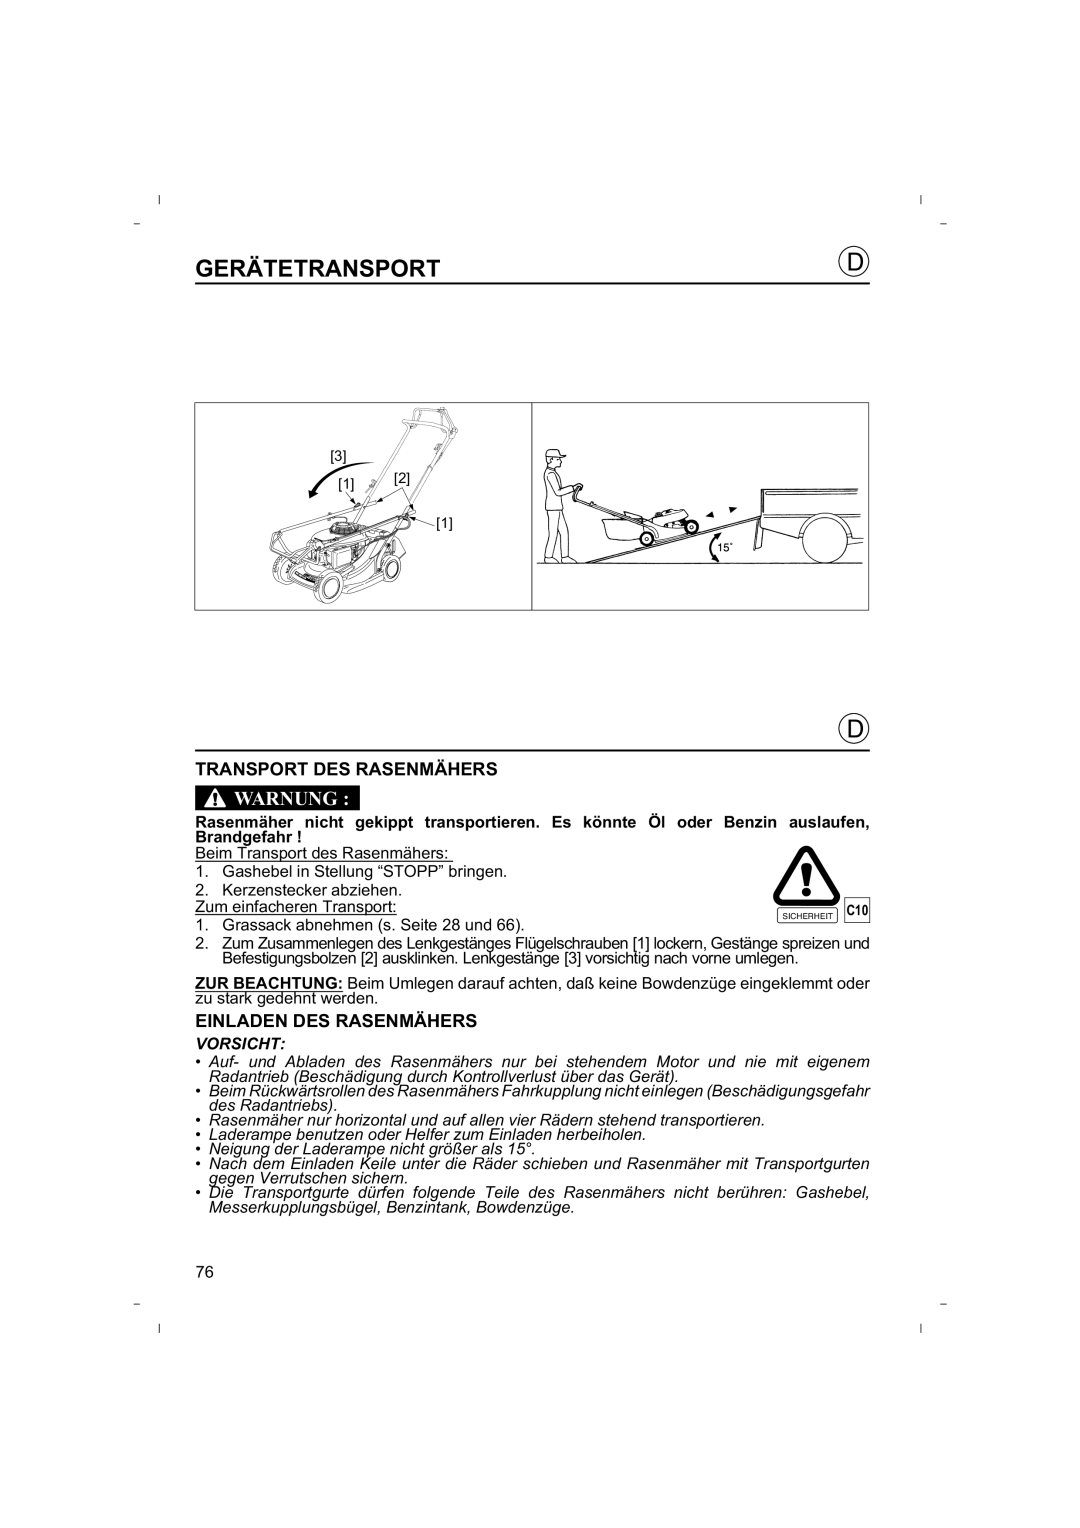 Honda Power Equipment HRB425C owner manual Gerätetransport, Transport Des Rasenmähers, Einladen Des Rasenmähers, Warnung 